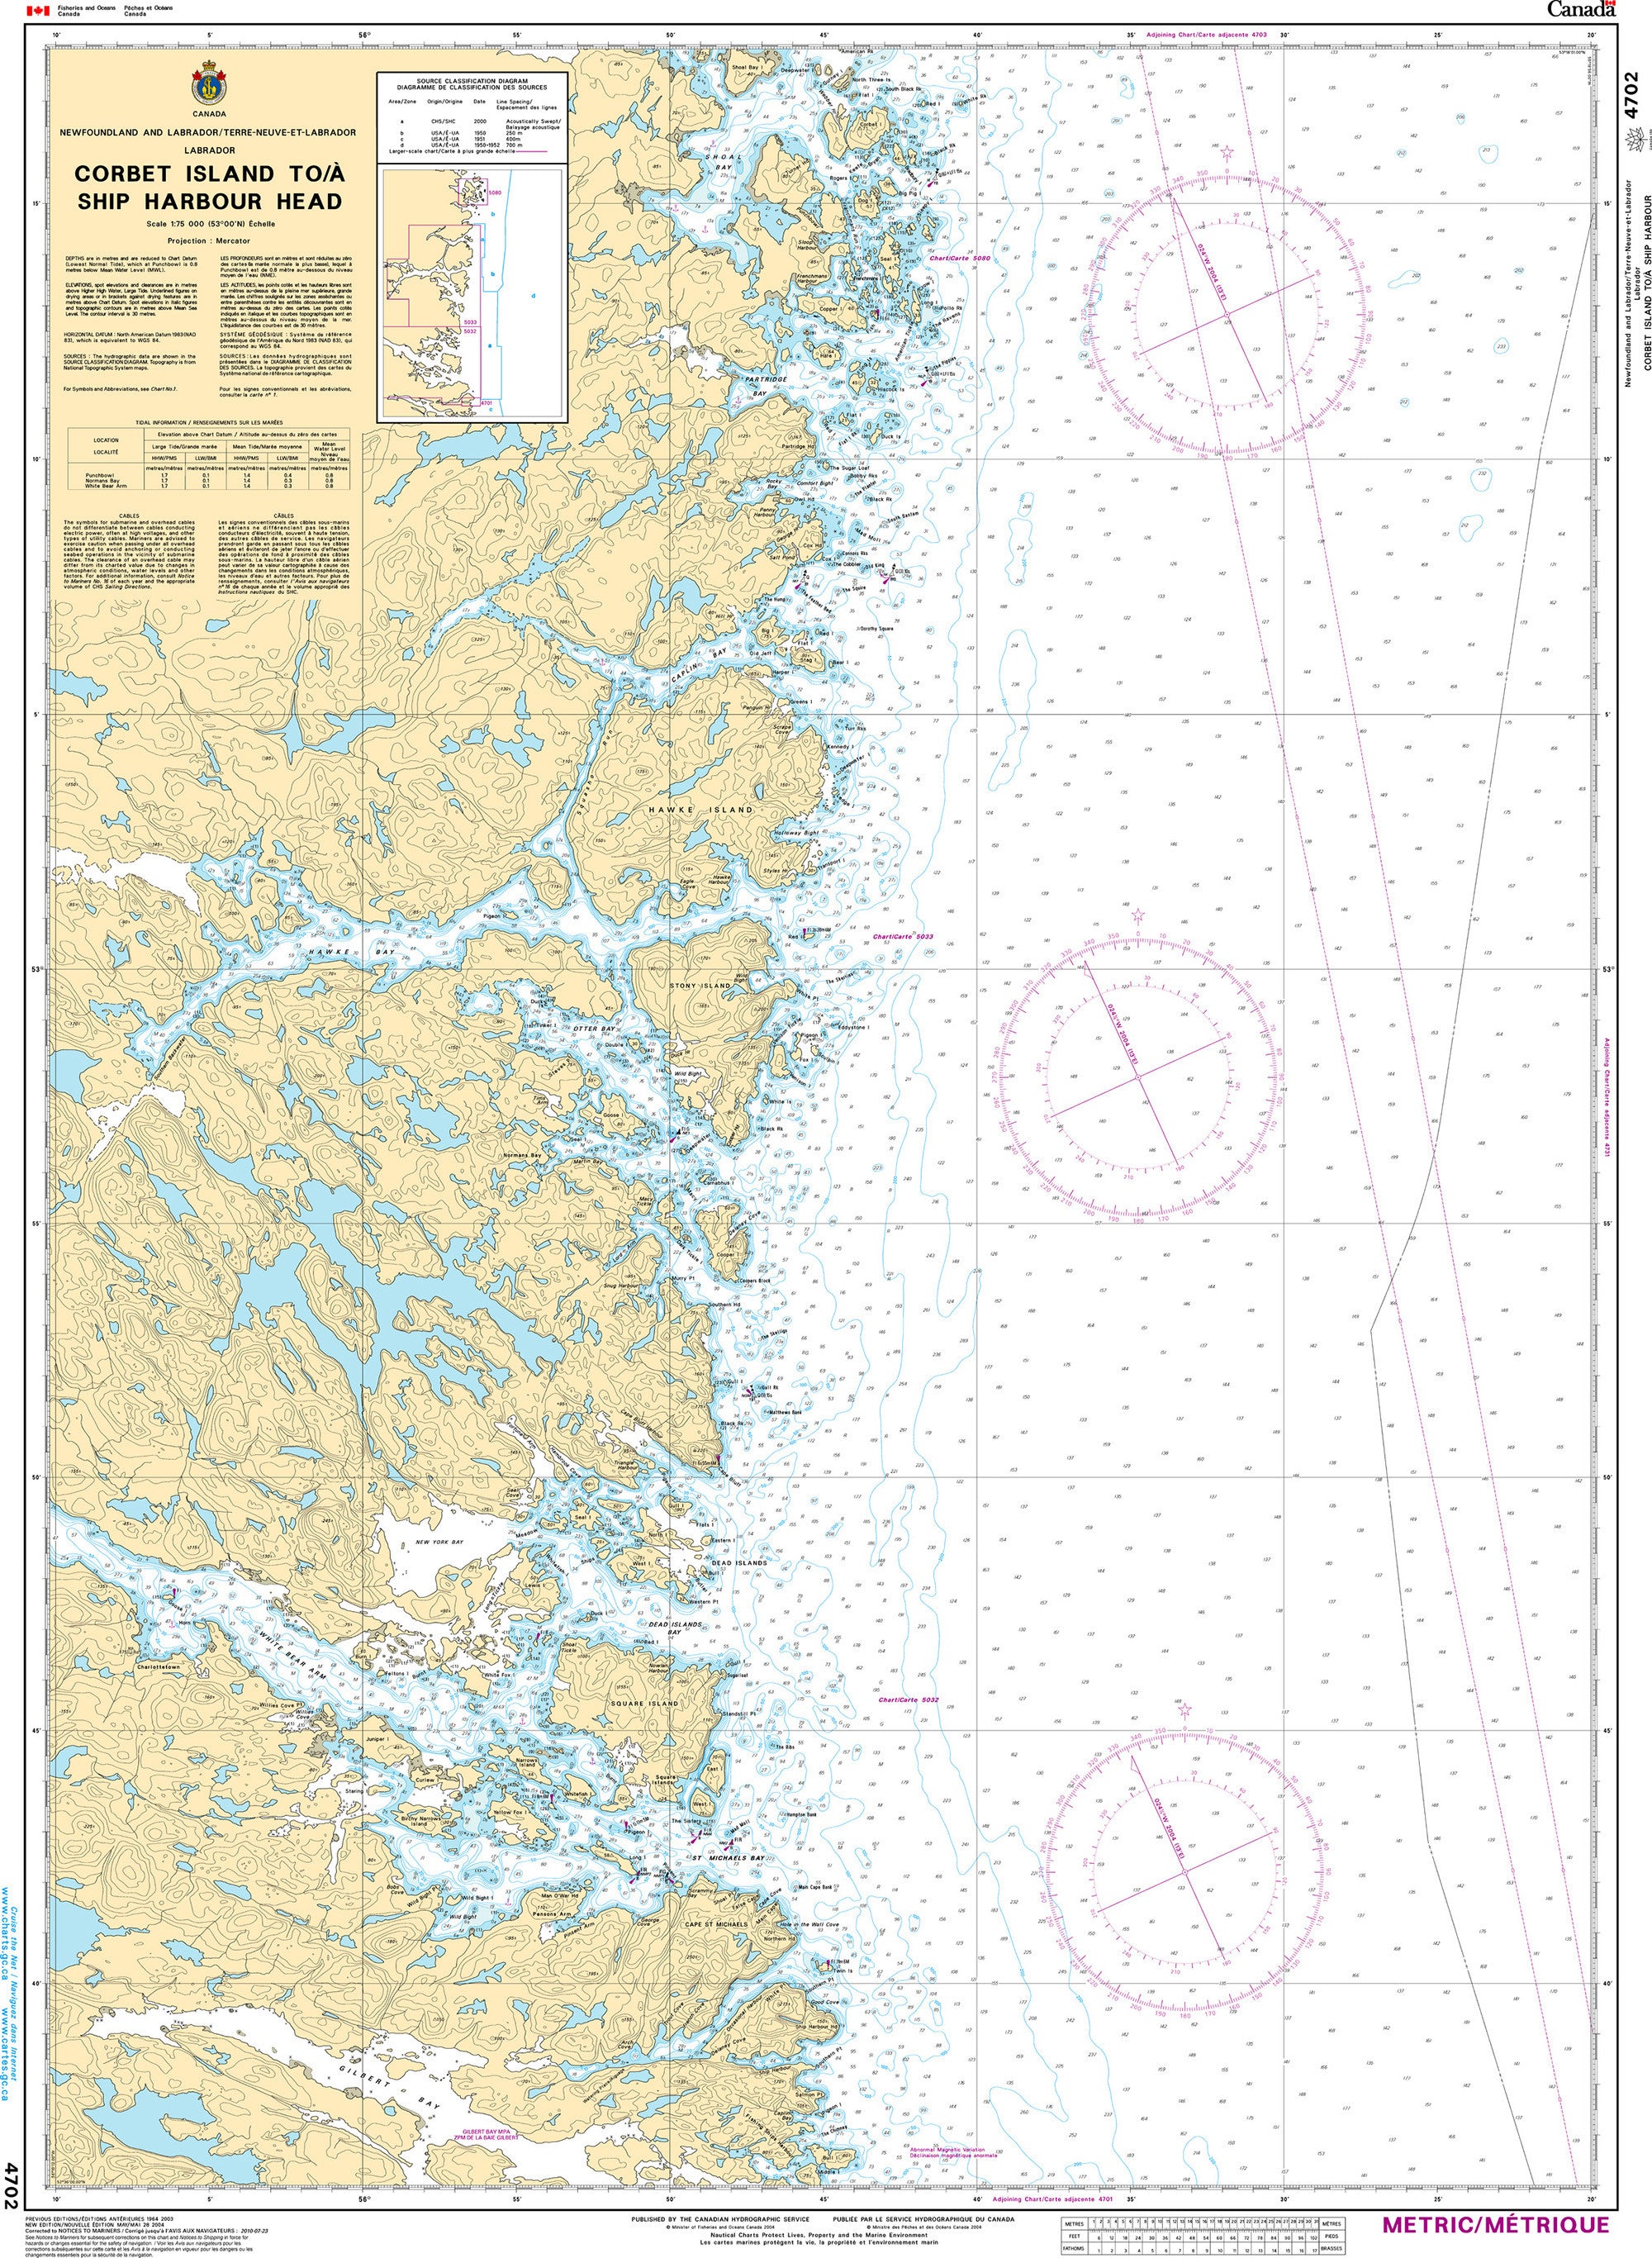 Canadian Hydrographic Service Nautical Chart CHS4702: Corbett Island to/à Ship Harbour Head